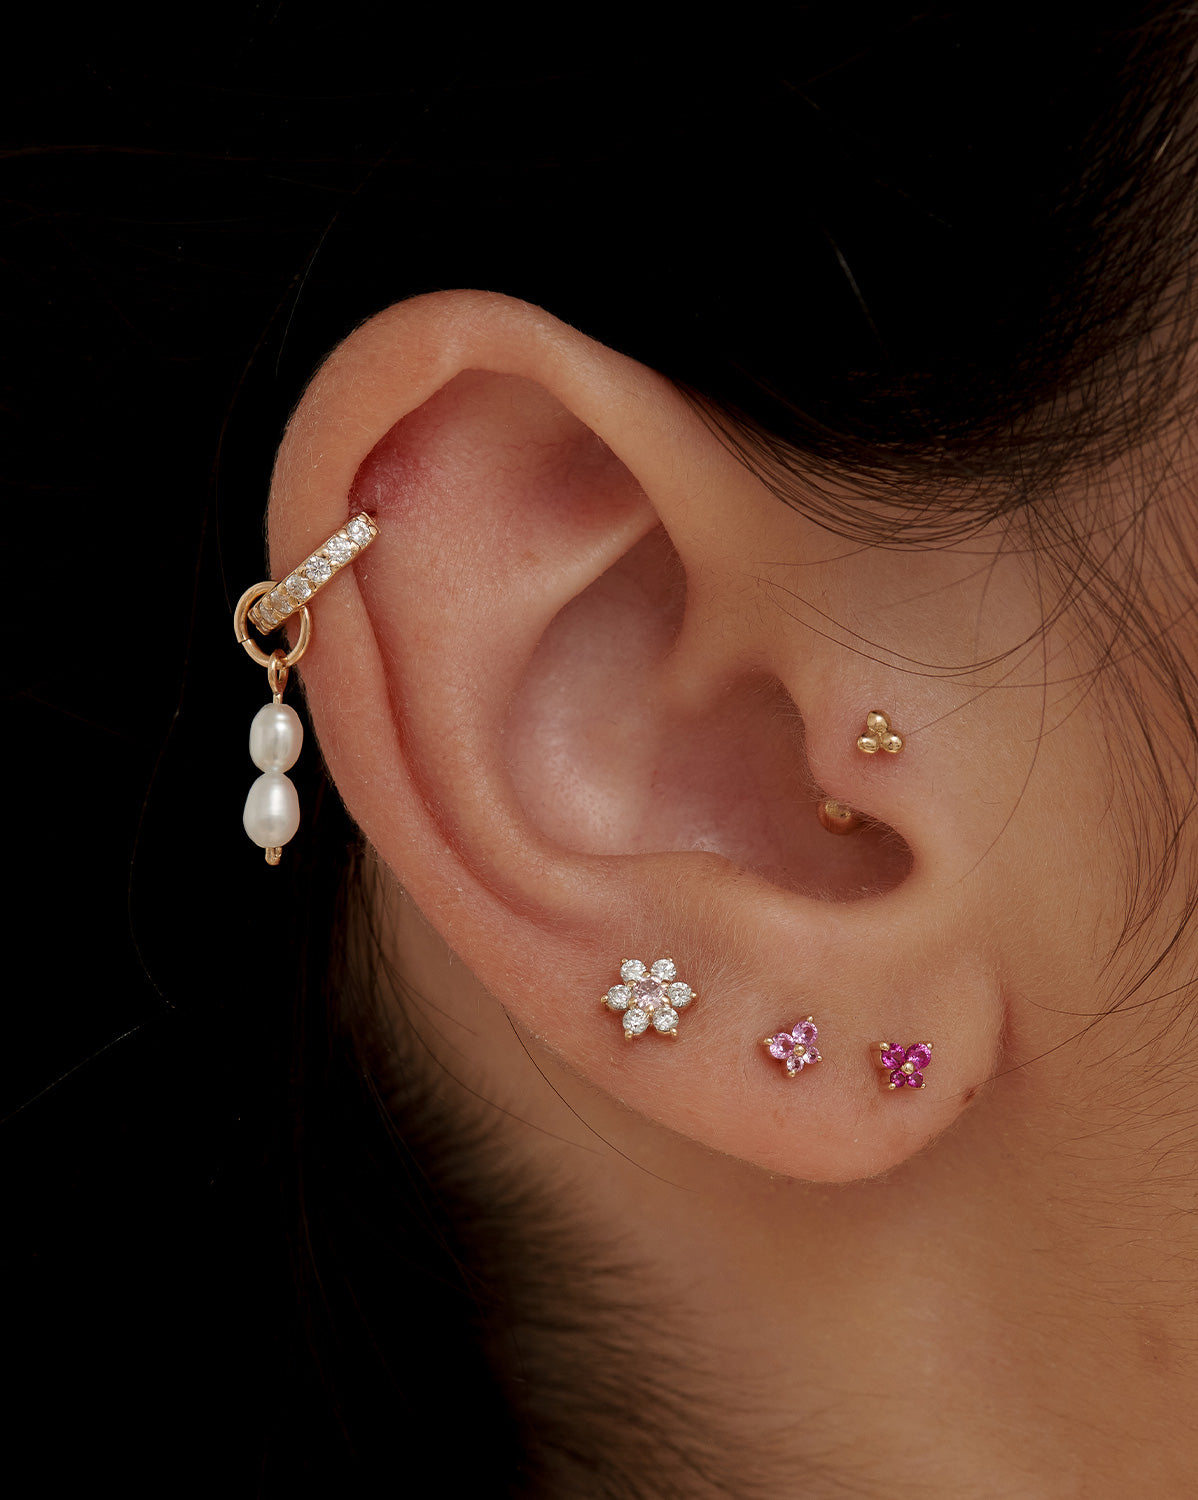 14K Solid Gold Ophelia Pave Huggie Hoop | S-kin Studio Jewelry | Ethical Piercing Earrings